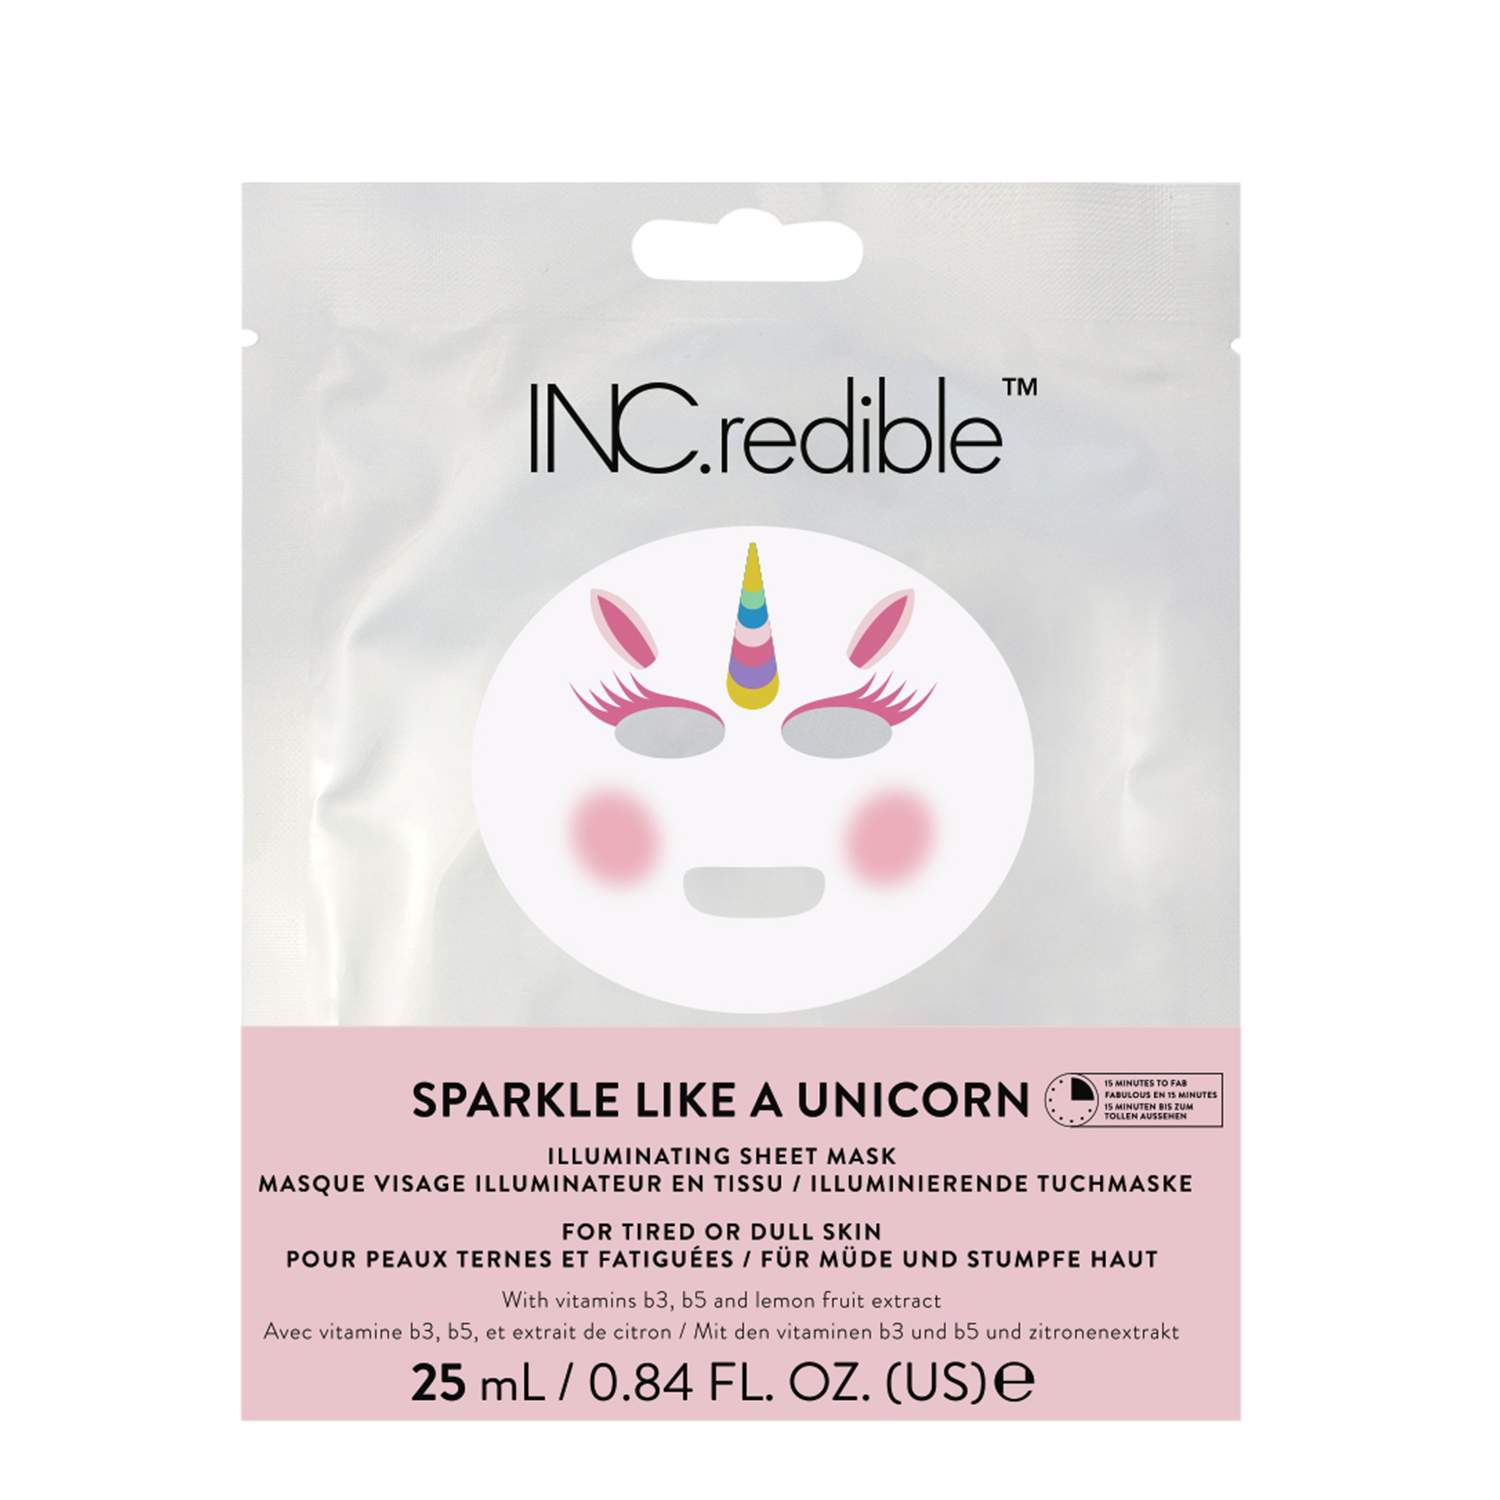 INC.redible Sparkle Like a Unicorn Illuminating Sheet Mask INC.redible Sparkle Like a Unicorn Illuminating Sheet Mask 1